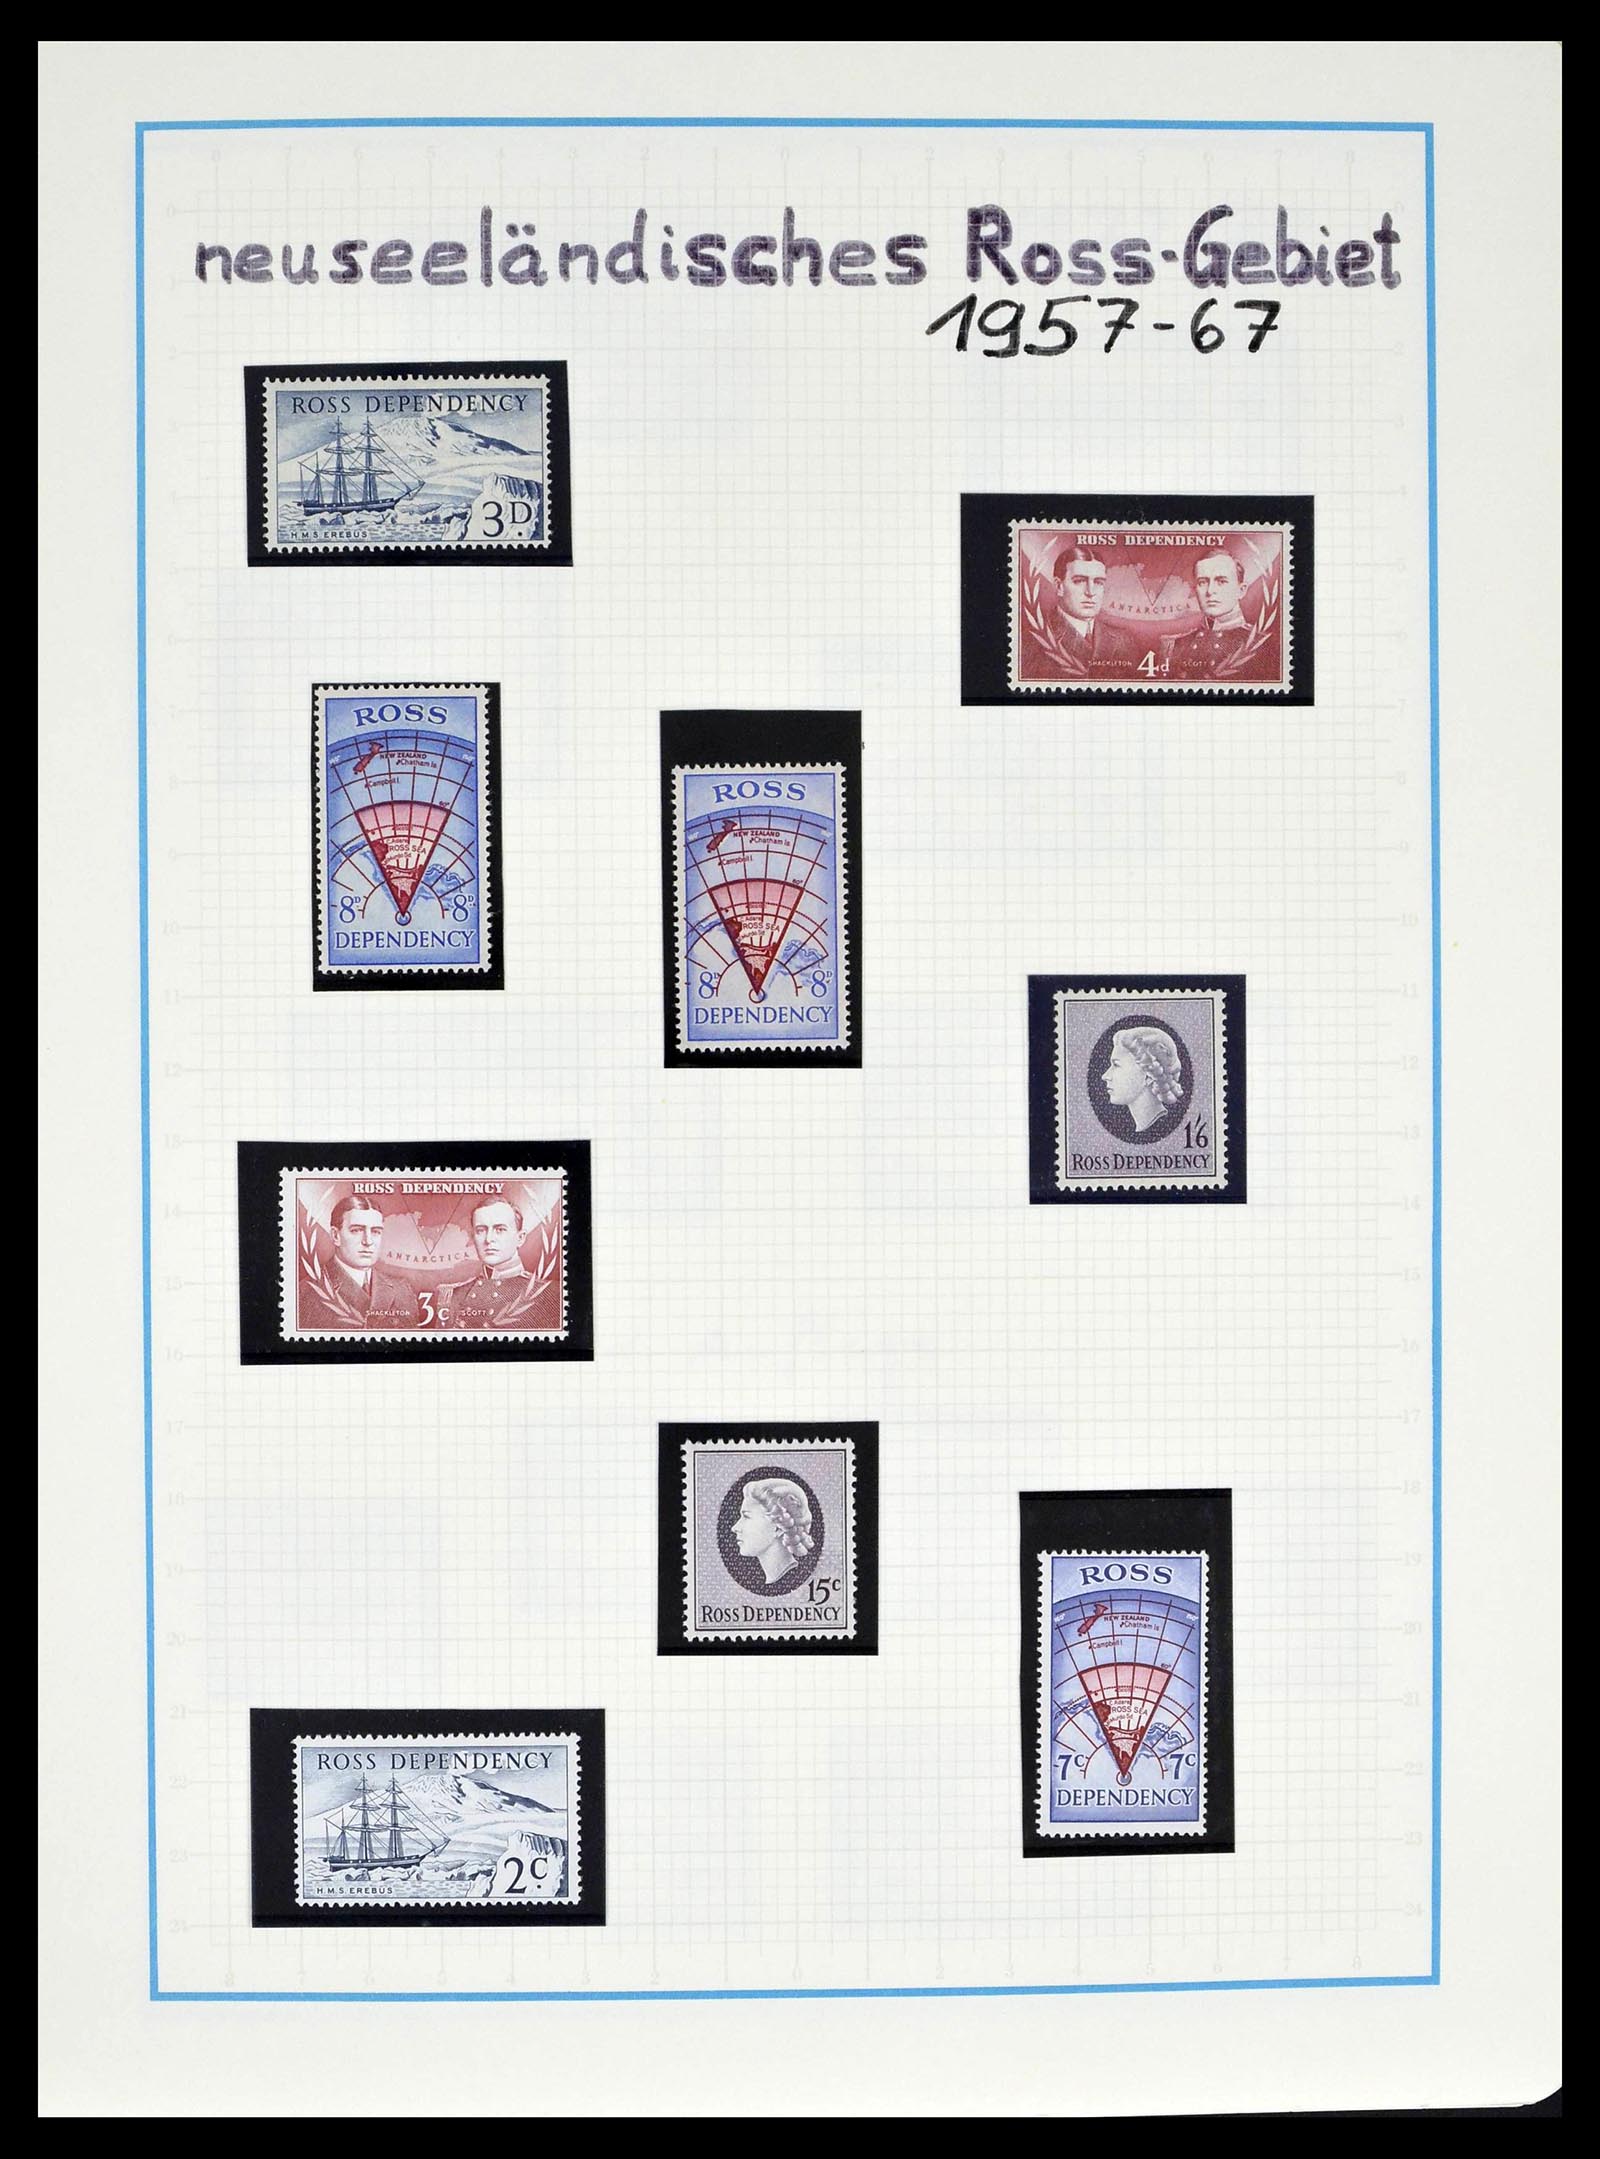 39398 0050 - Stamp collection 39398 Antarctica 1908-1984.